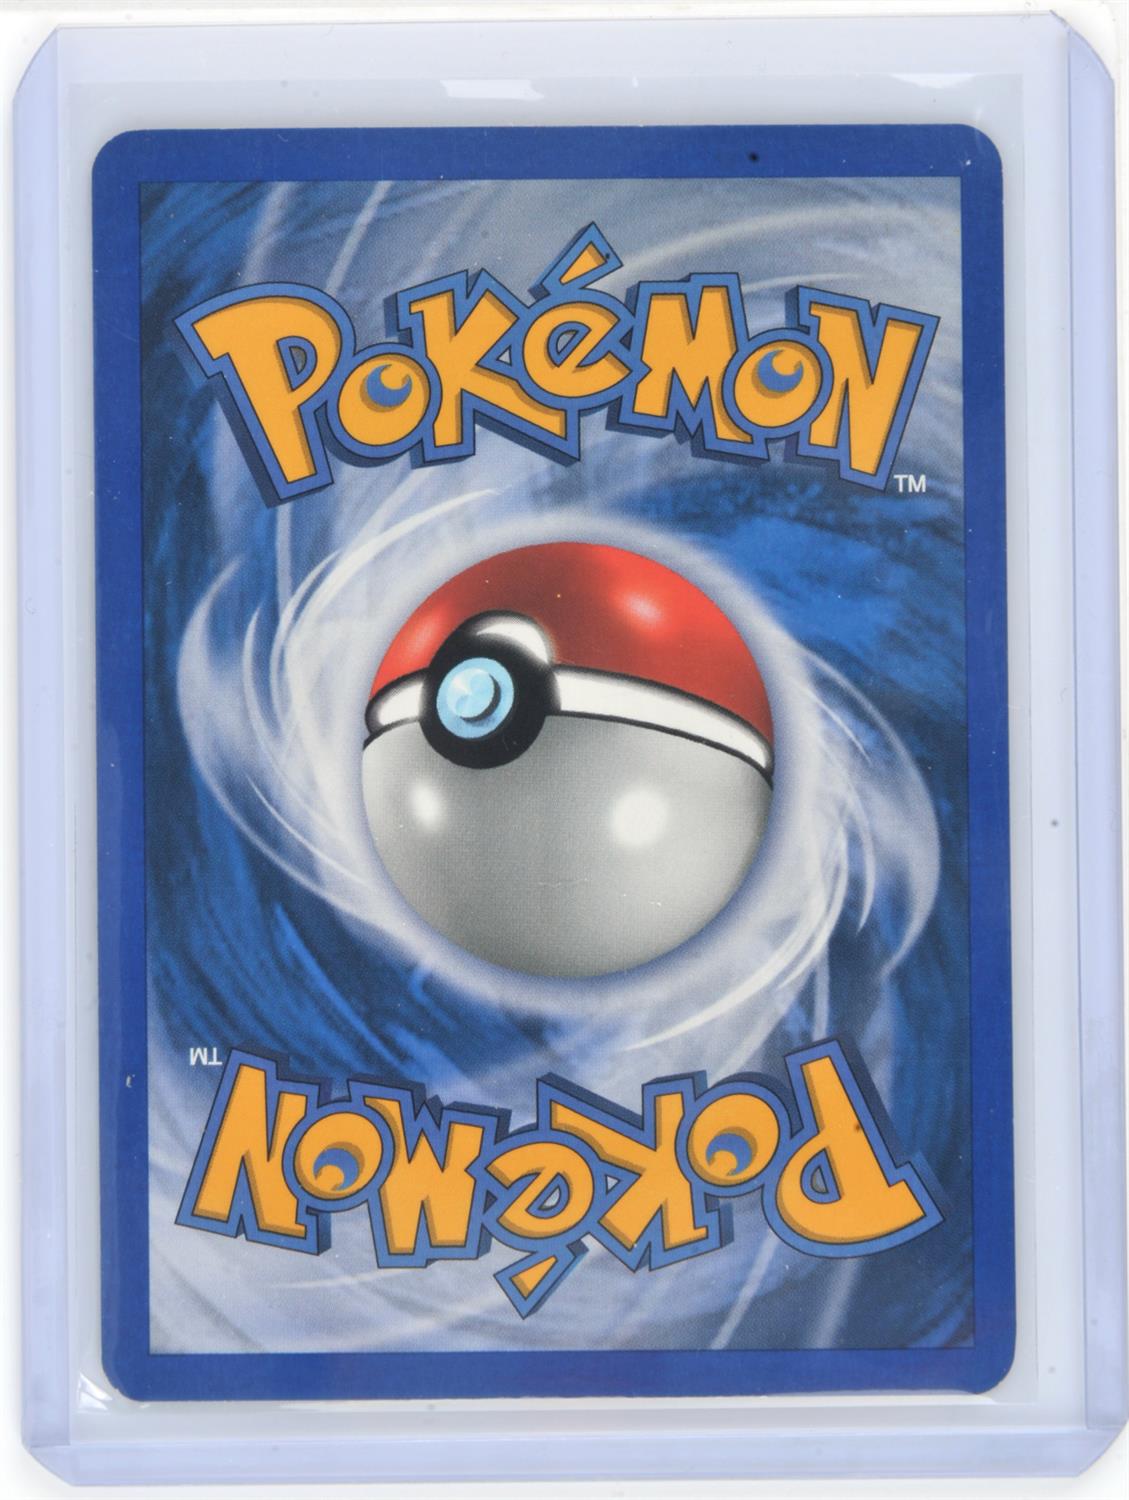 Pokemon TCG. Charizard Crystal Guardians Reverse Holographic Pokémon Card 4/100. - Image 2 of 2